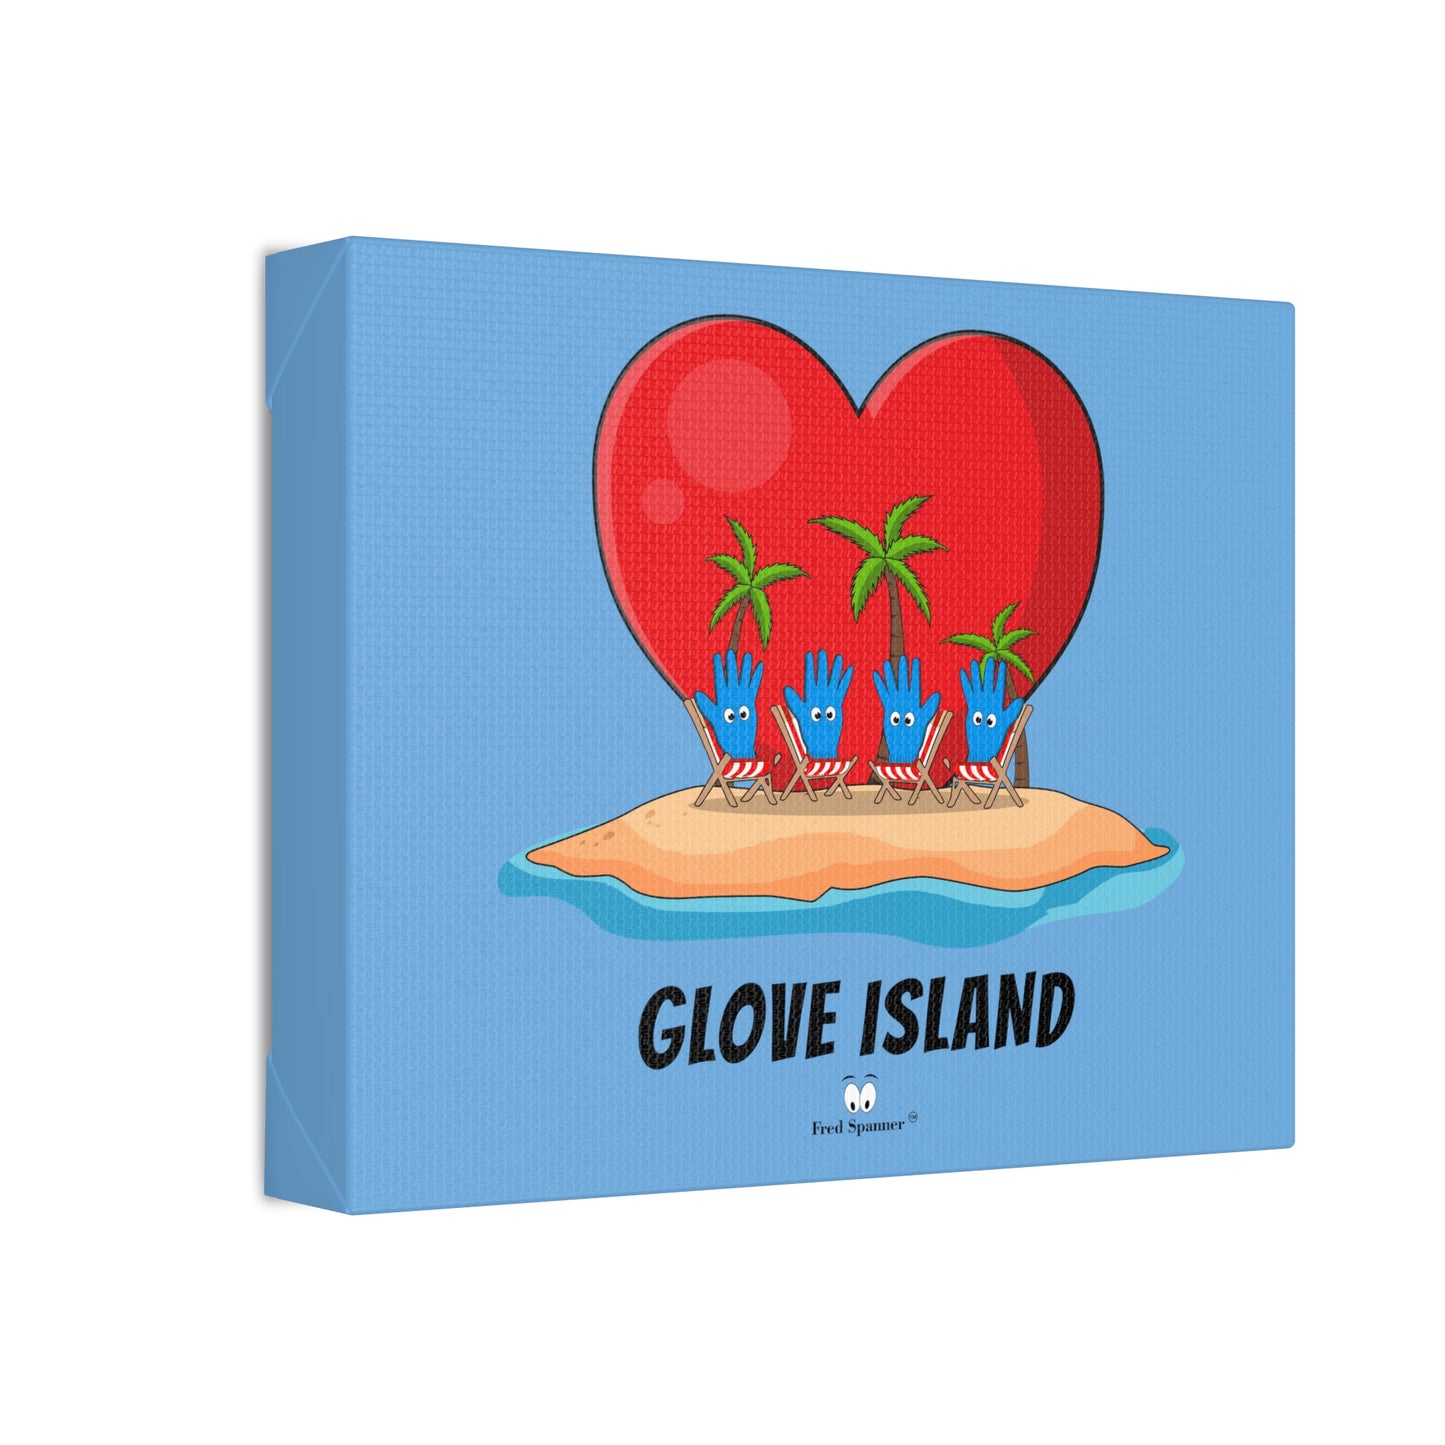 Glove Island- Canvas